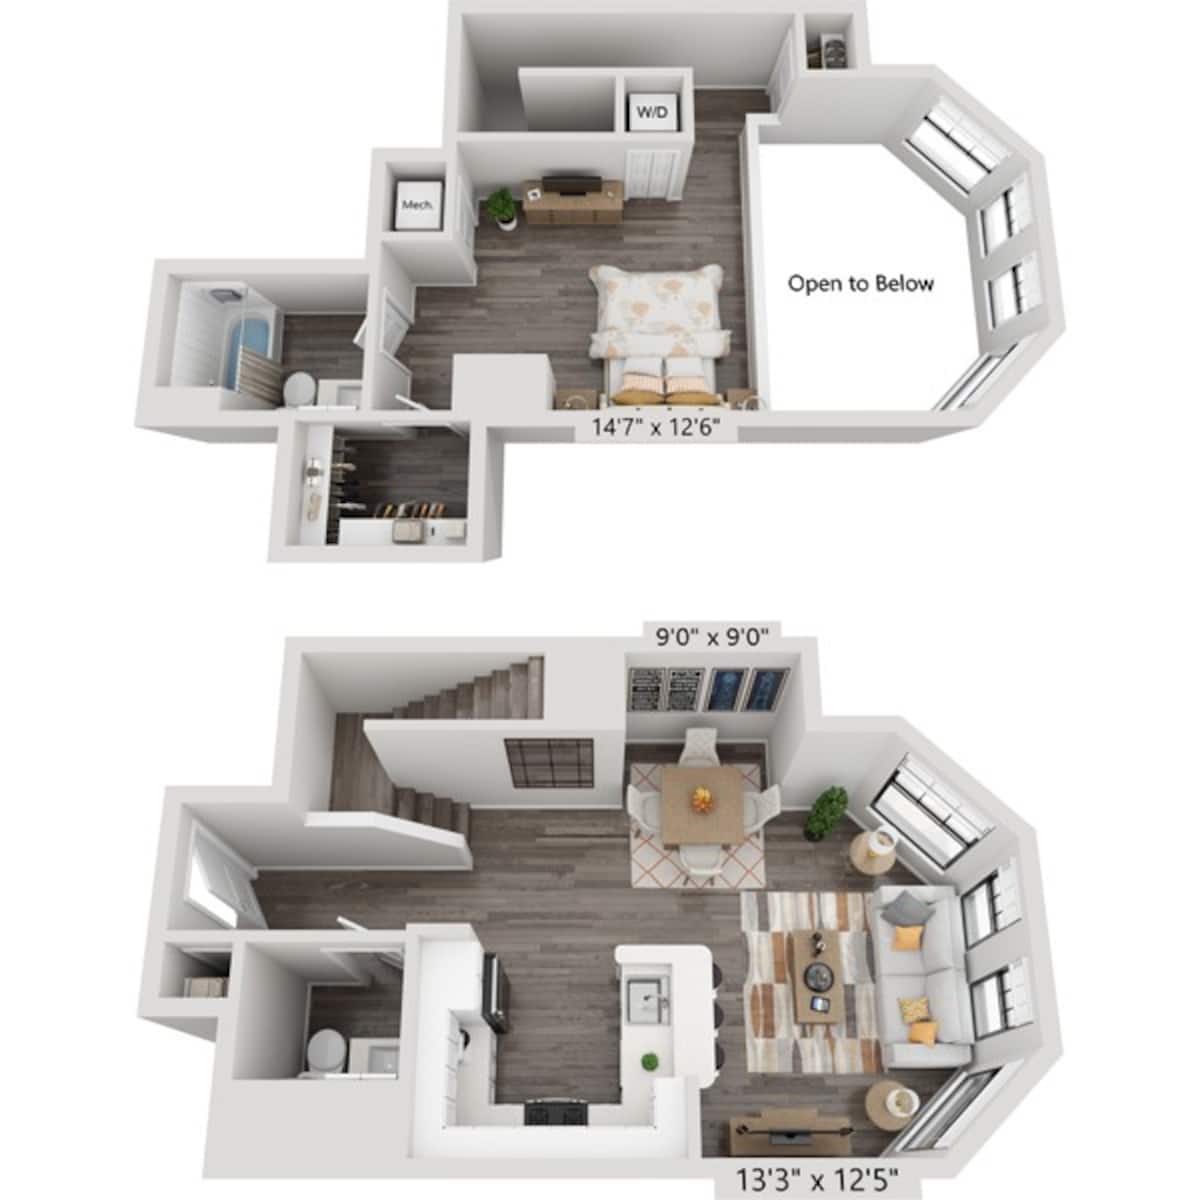 Floorplan diagram for One Bedroom A1.5CL, showing 1 bedroom